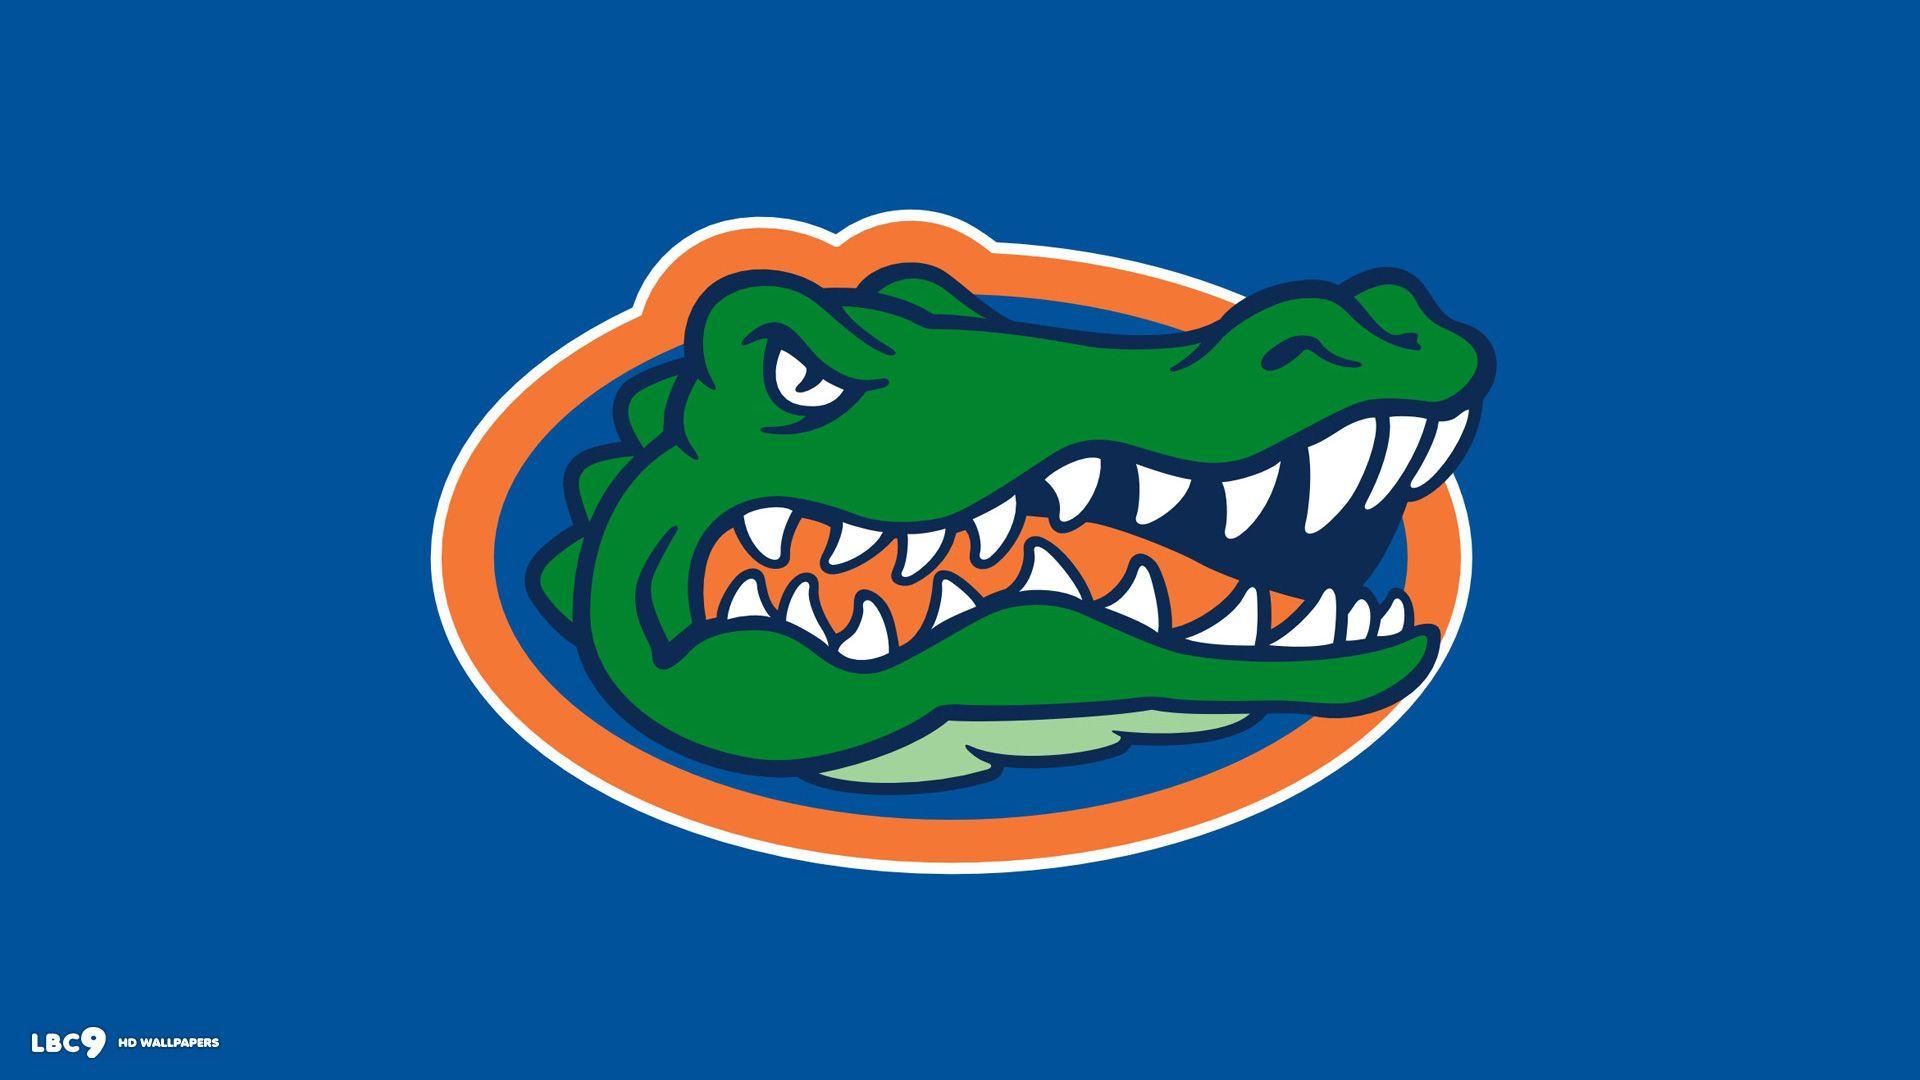 FL Gators Logo - Florida Gators Background